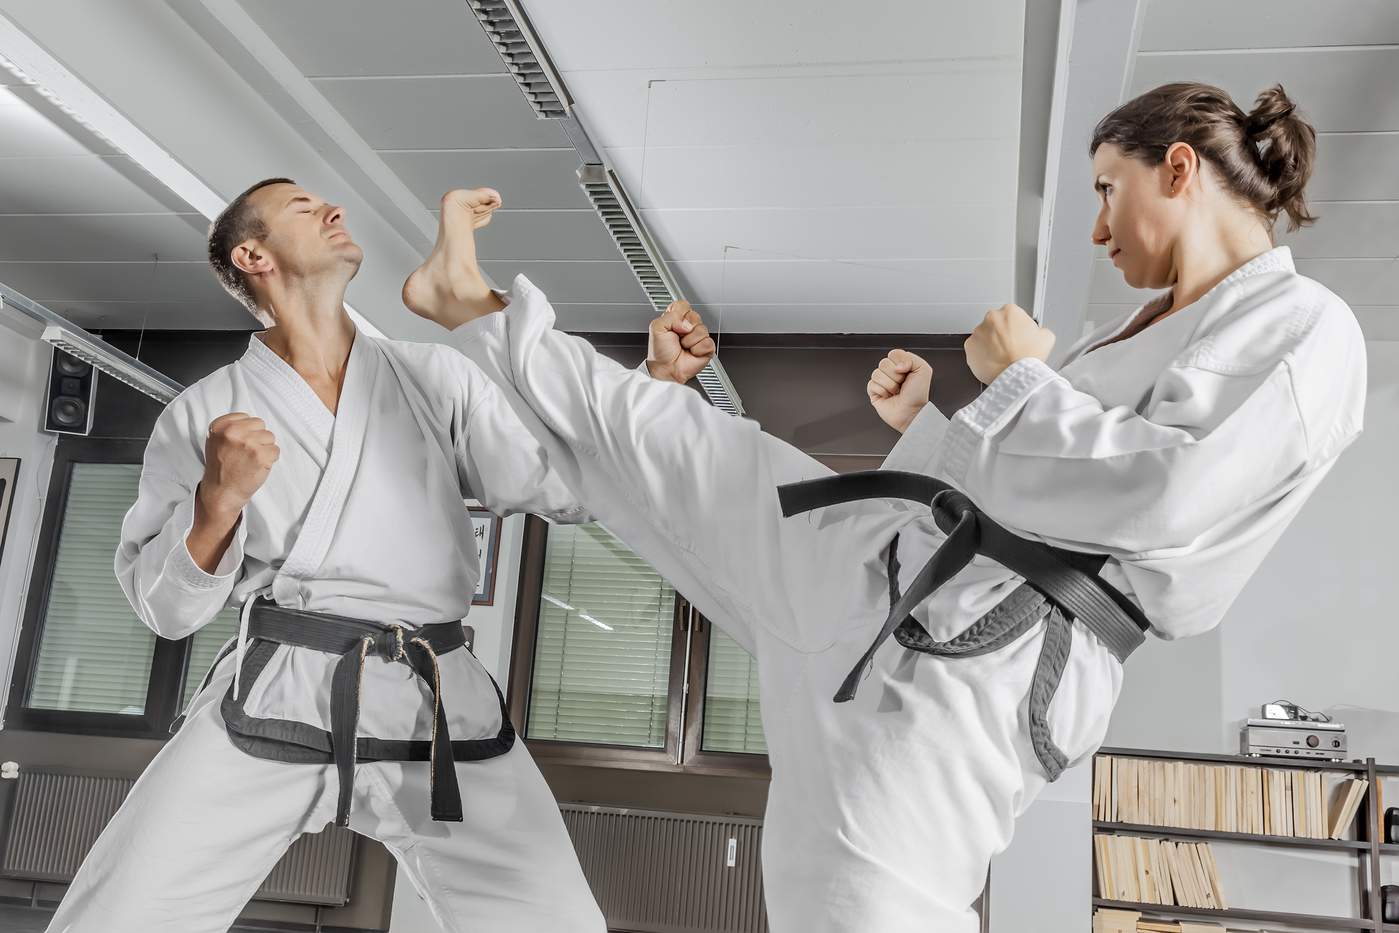 Female karate expert practicing self defense moves